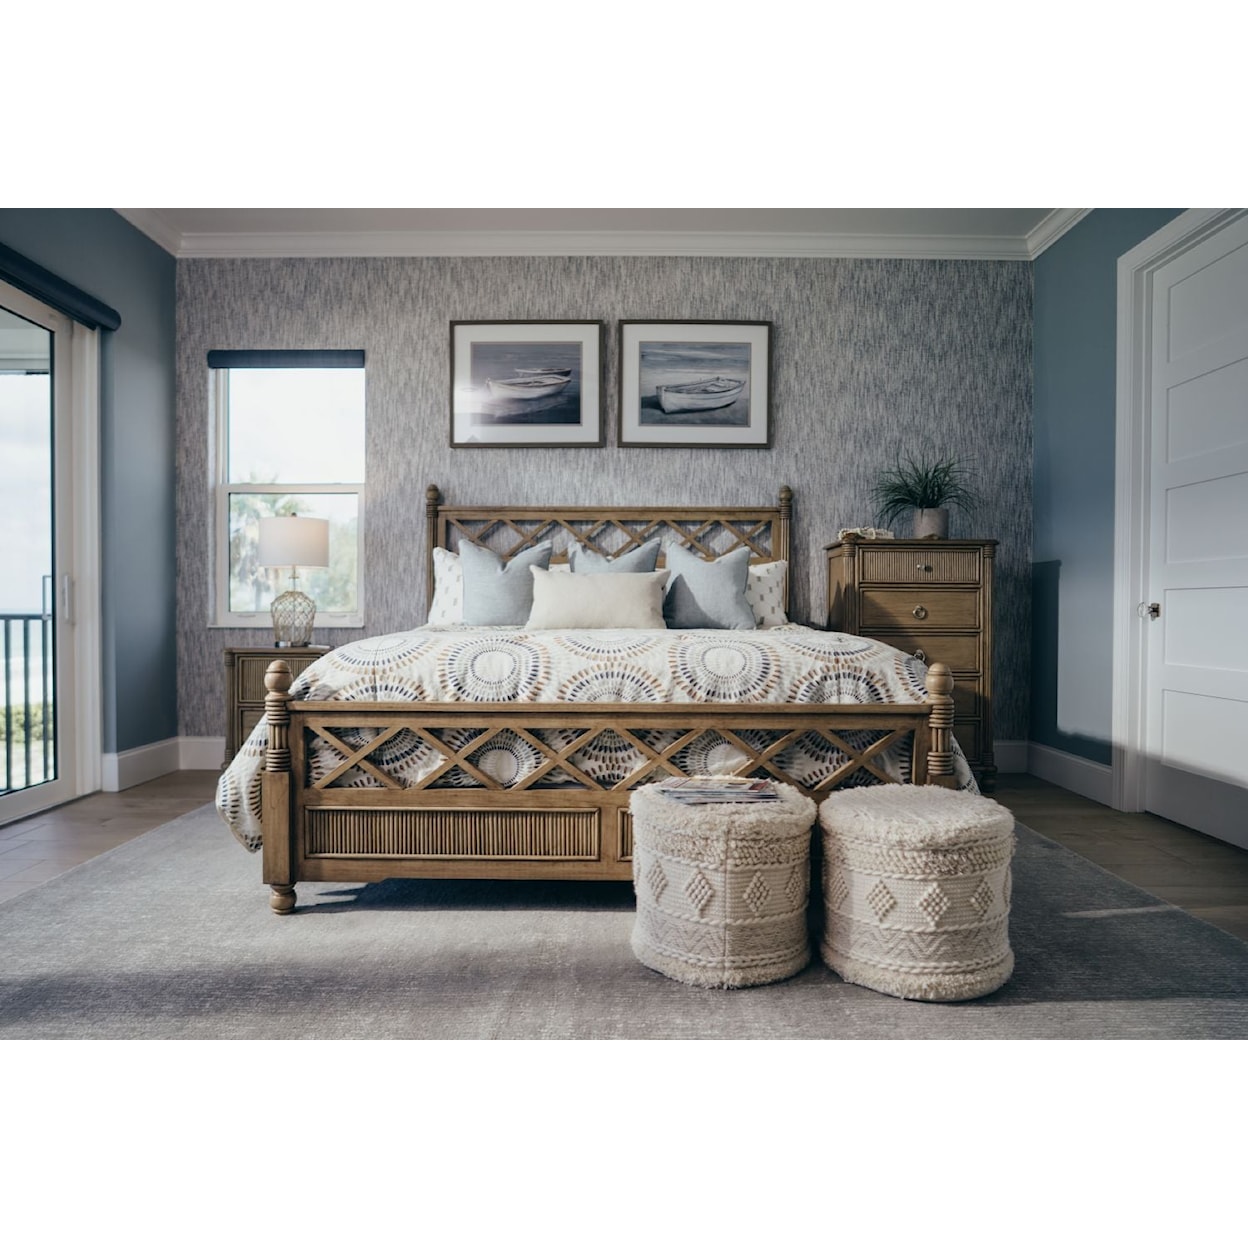 Sea Winds Trading Company Malibu 5-Piece Bedroom Set - King